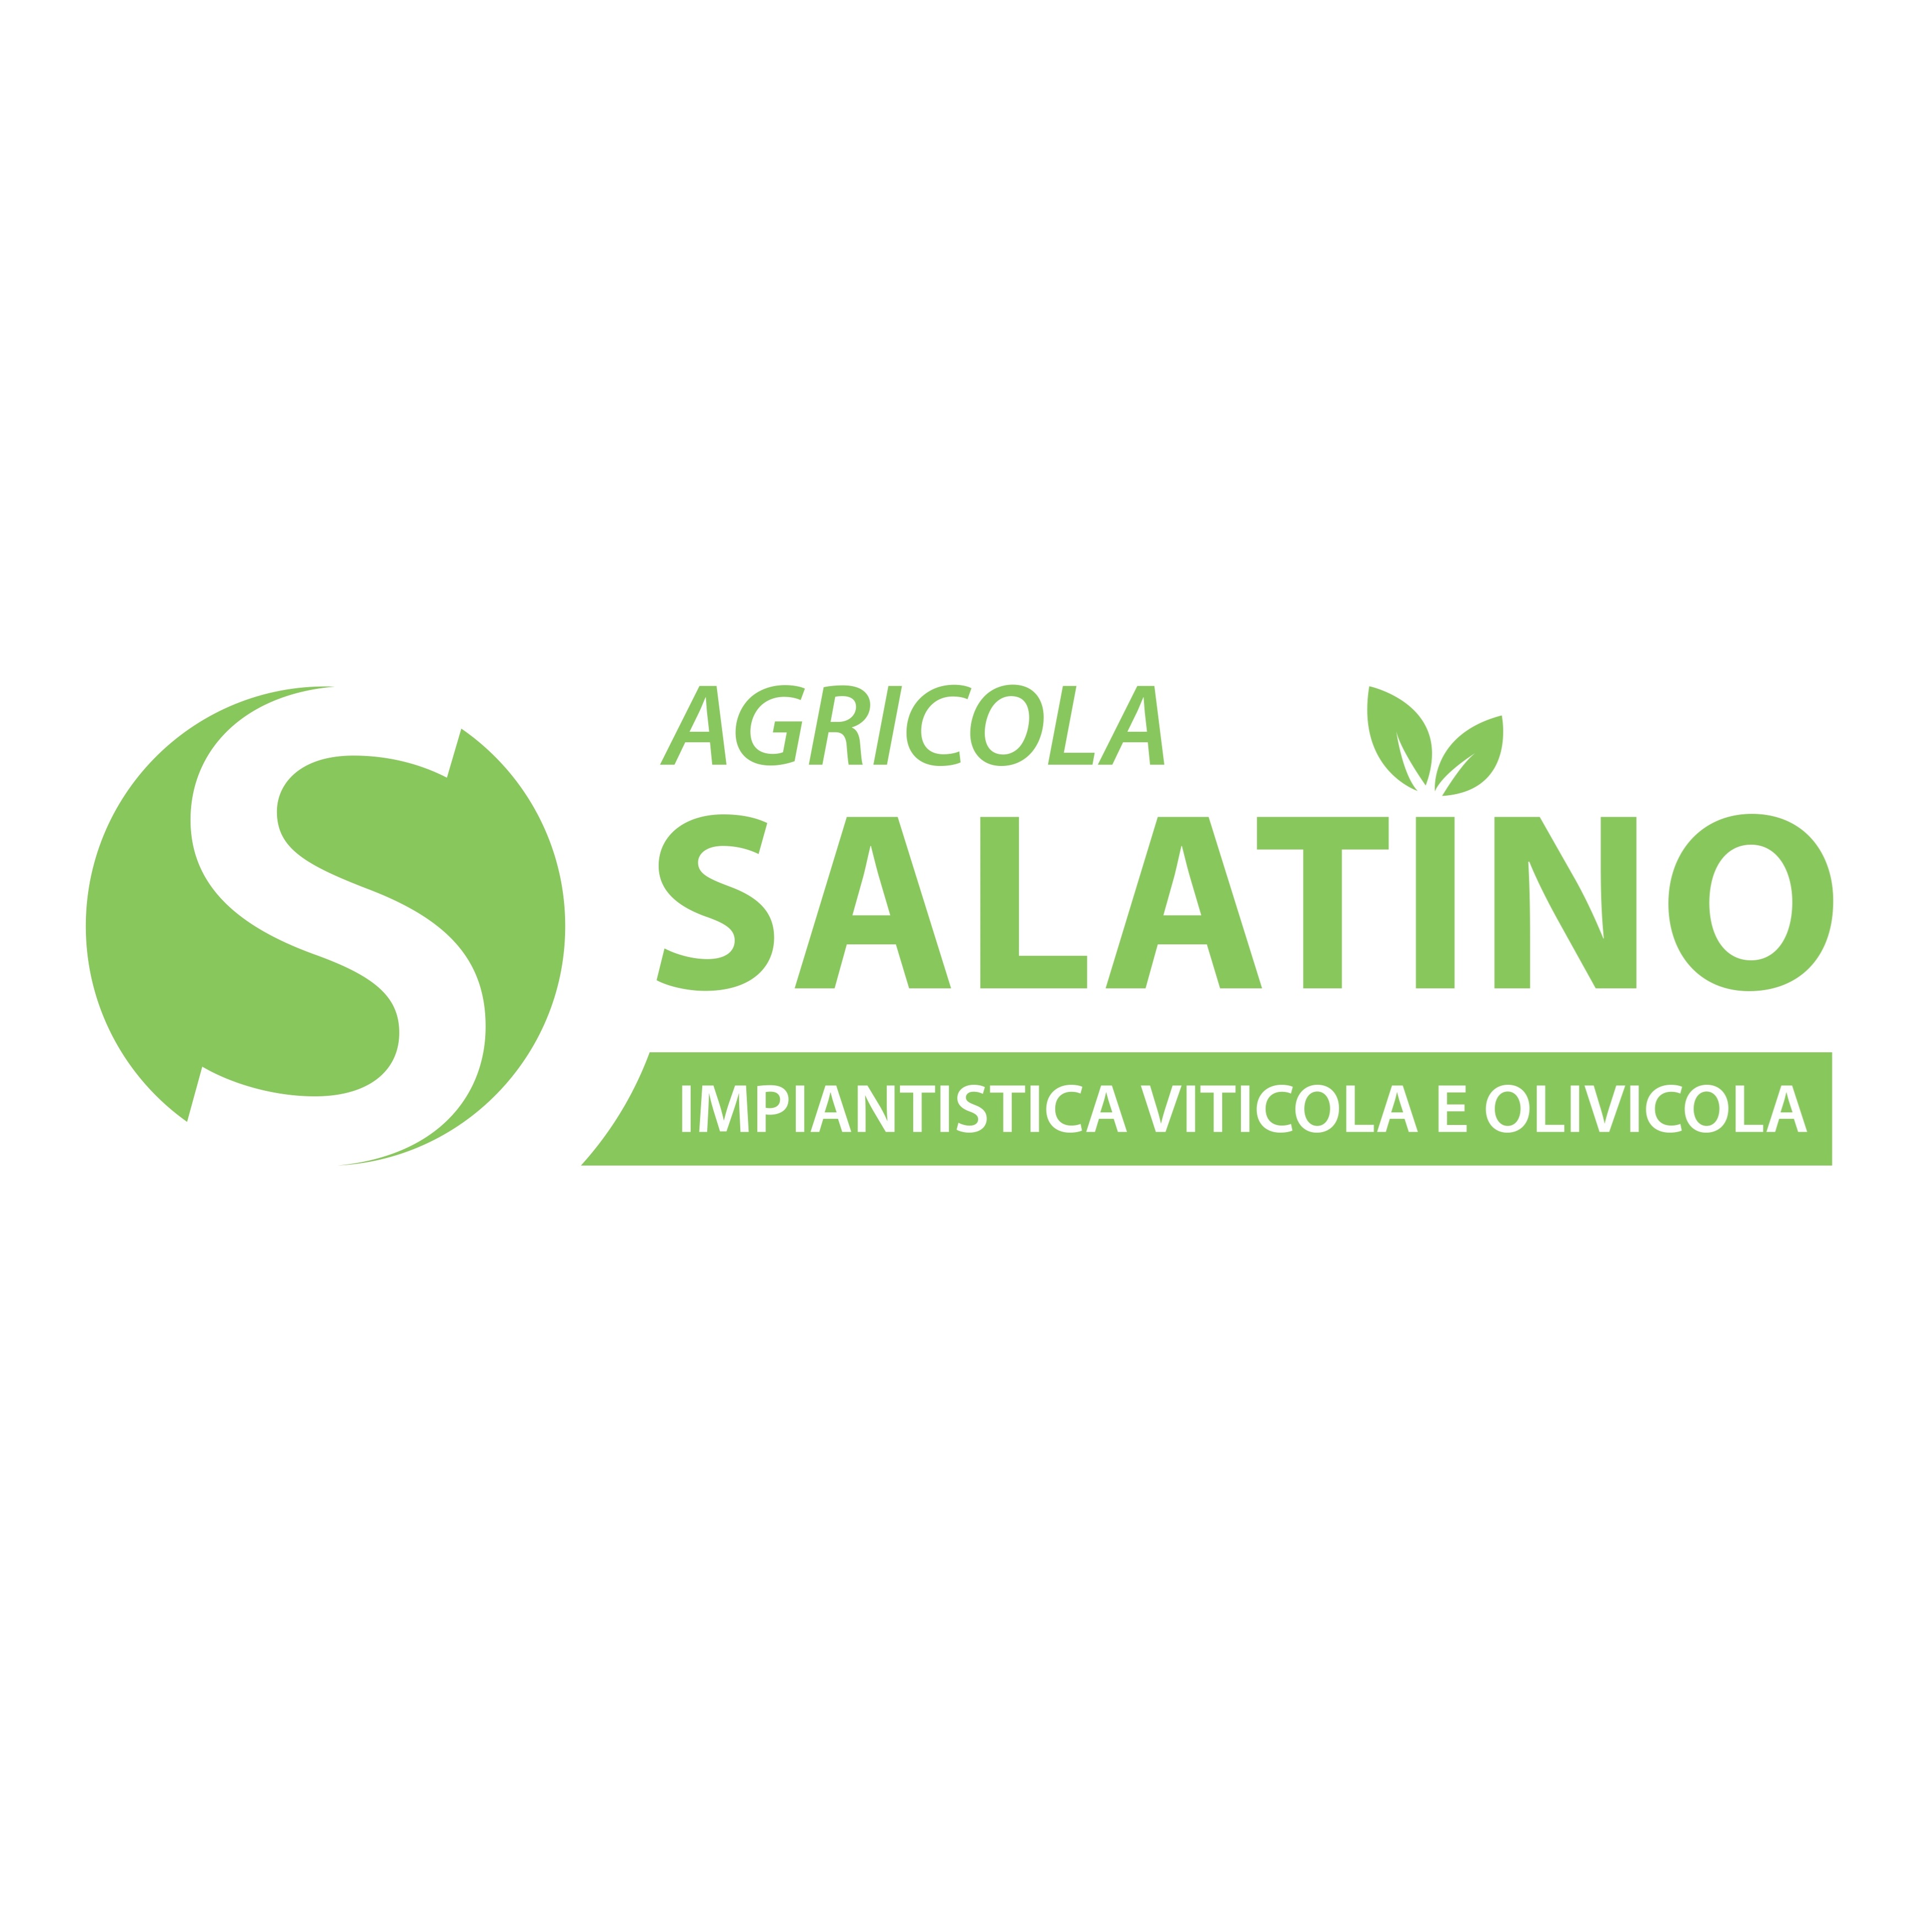 Agricola Salatino impiantistica page 0001